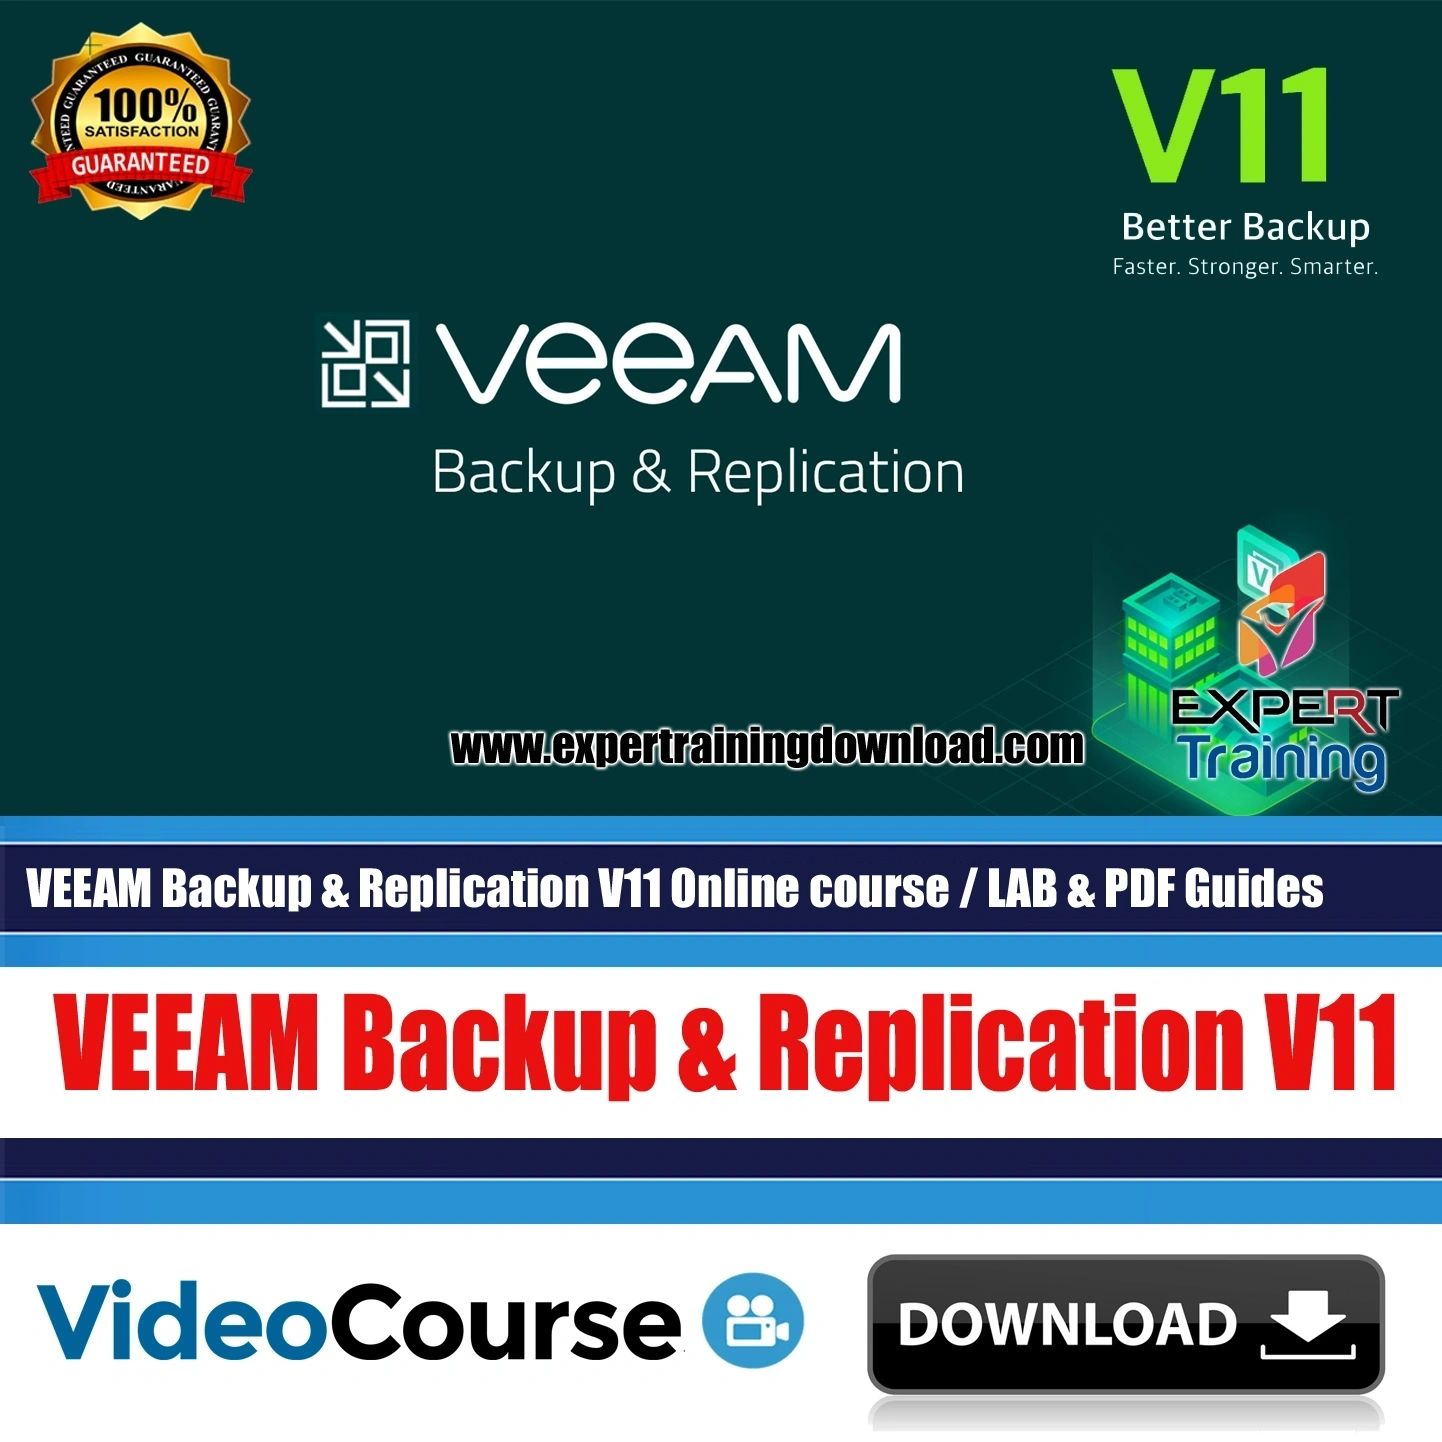 VEEAM Backup & Replication V11 course LAB Course & PDF Guides